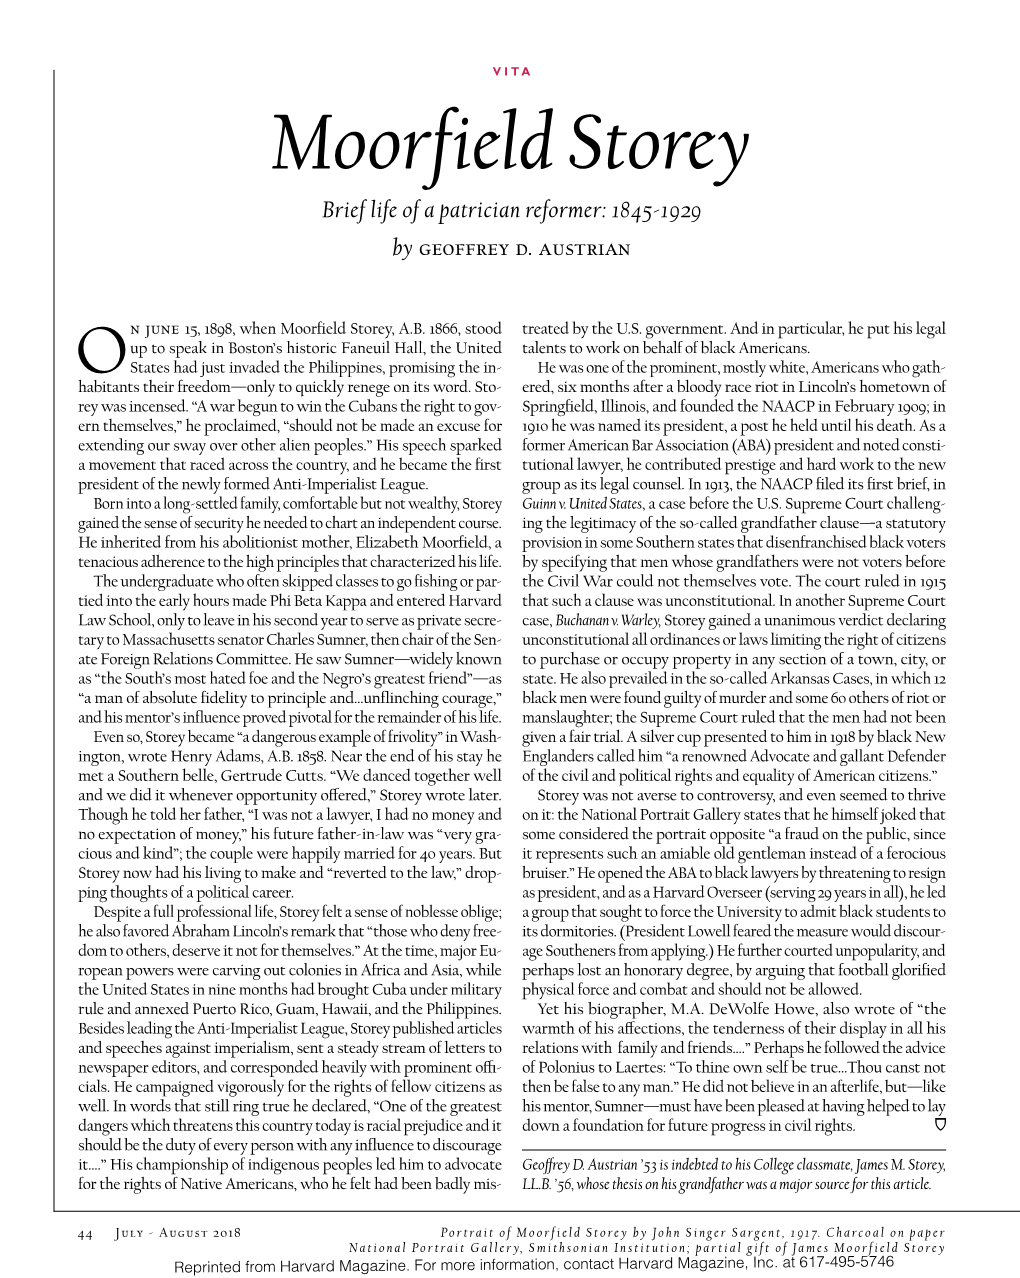 Moorfield Storey Brief Life of a Patrician Reformer: 1845-1929 by Geoffrey D